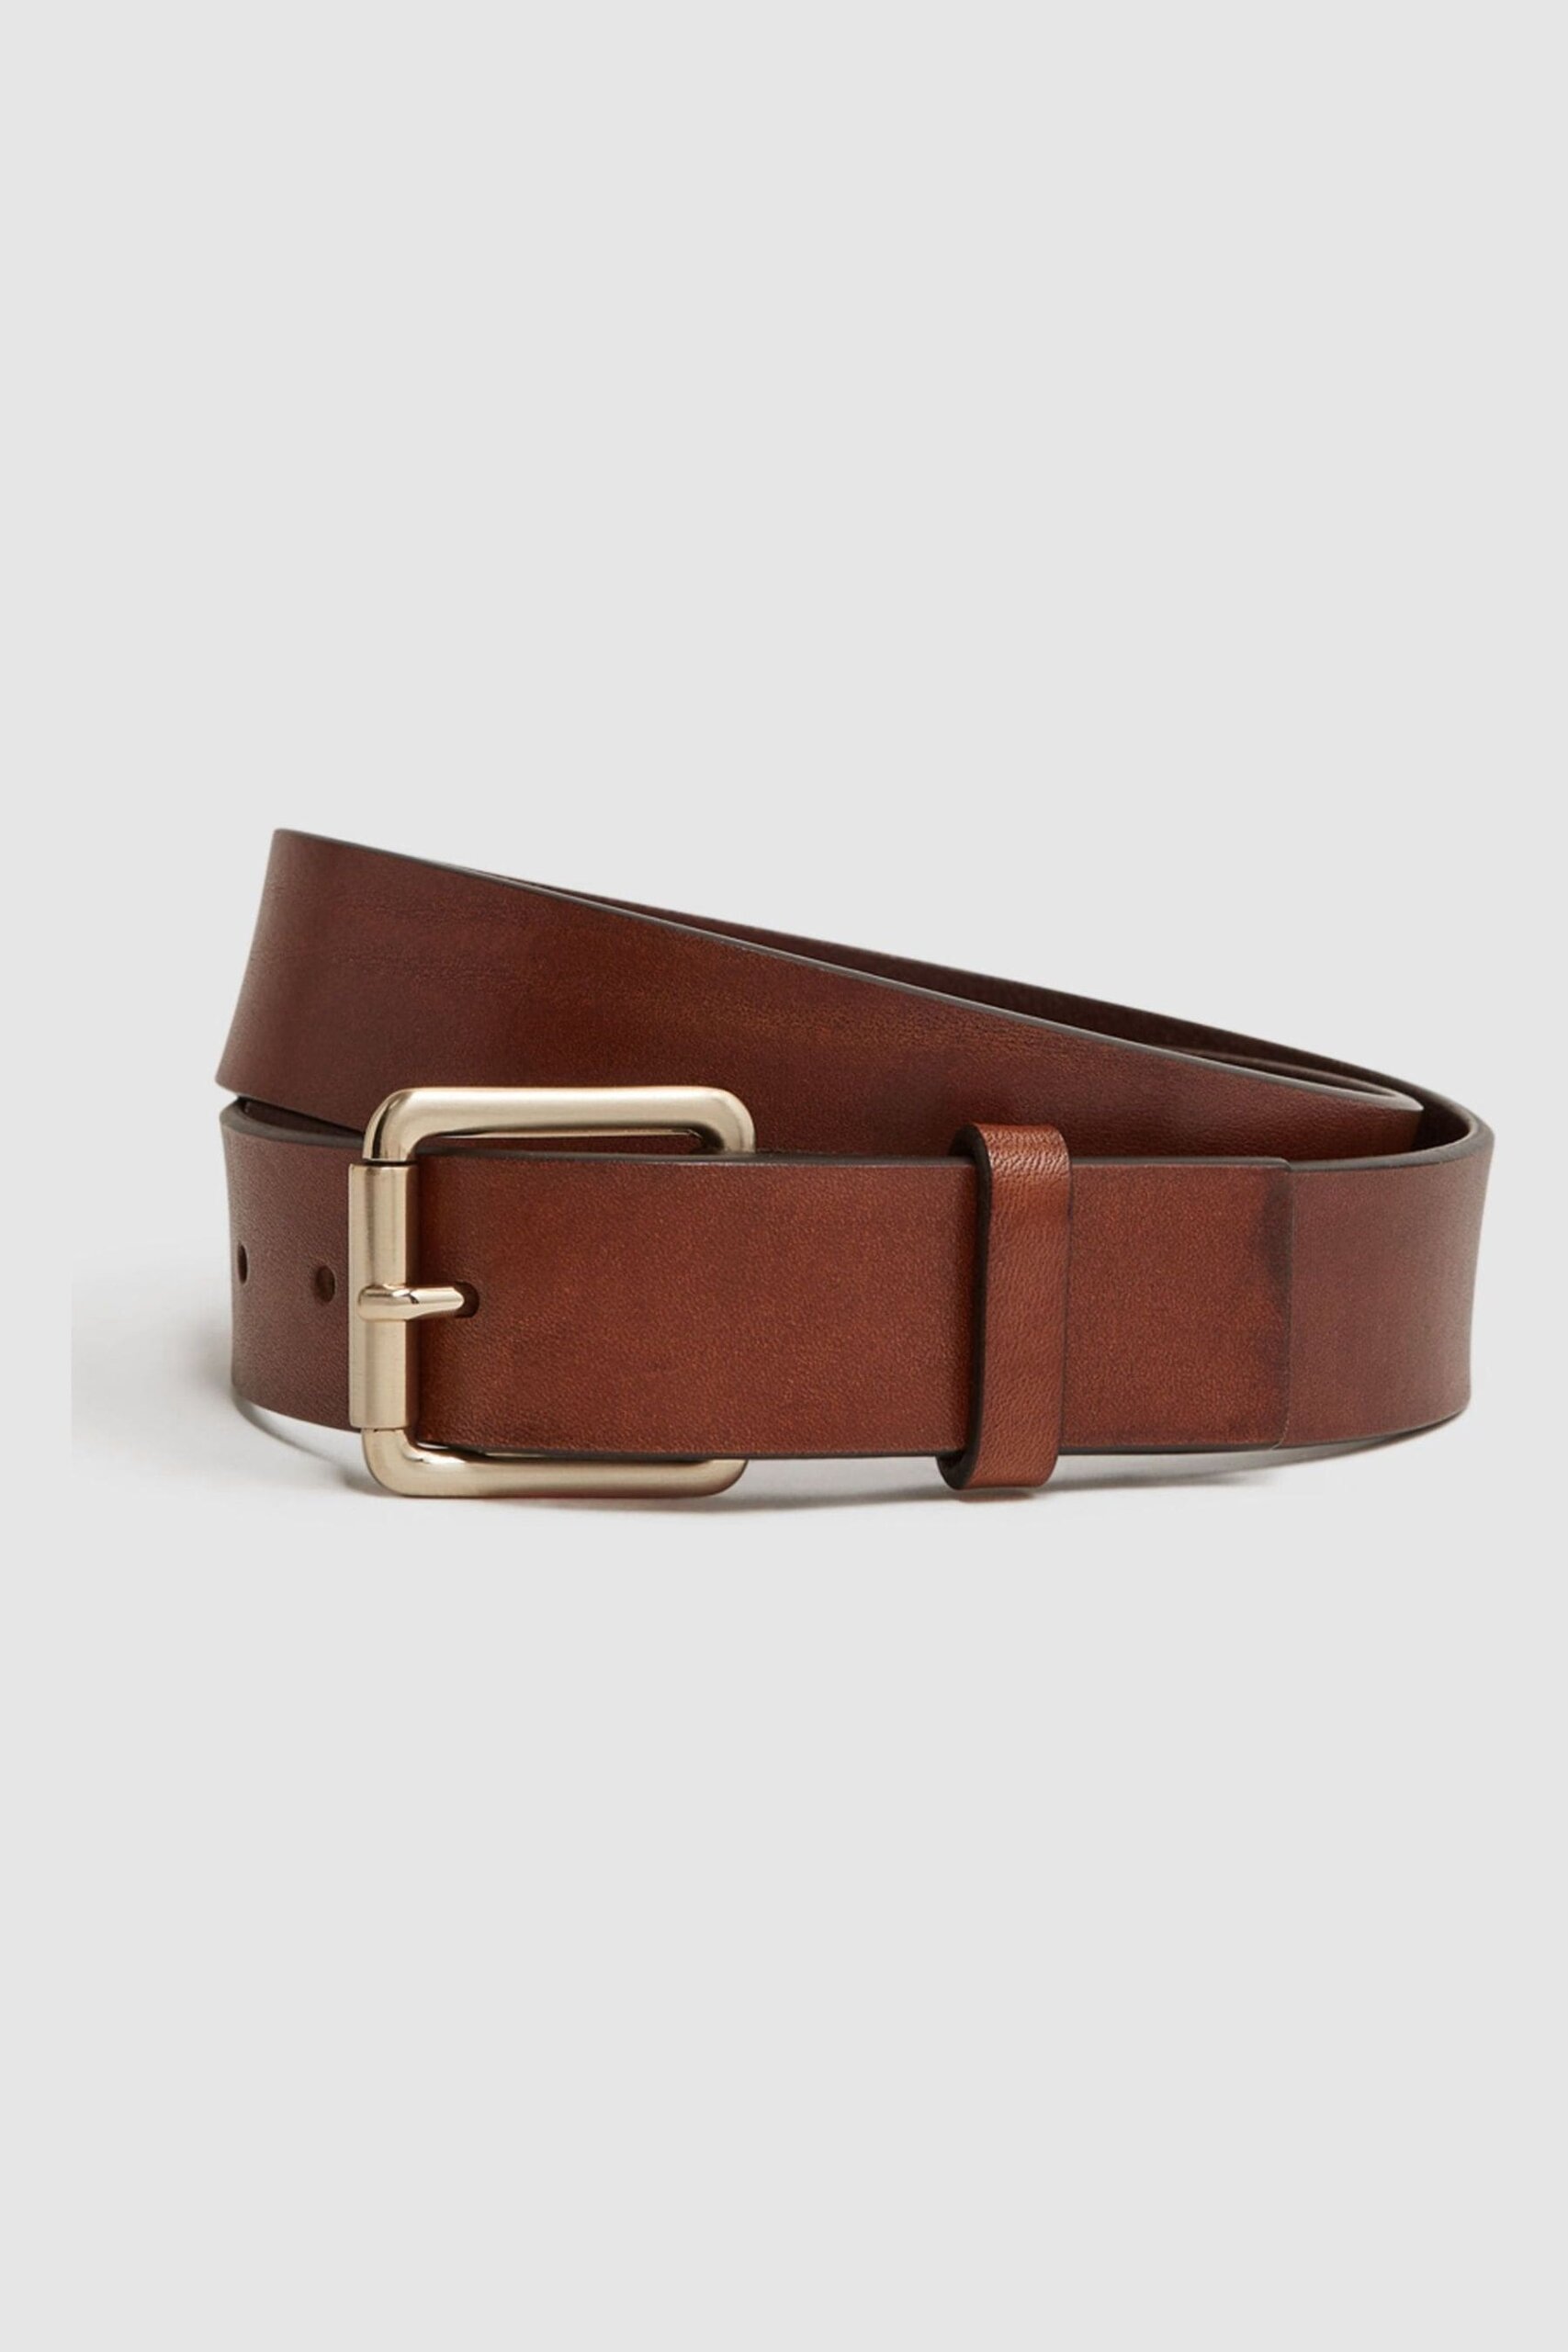 Grayson Rivet Belt - Tan Brown Leather Plain